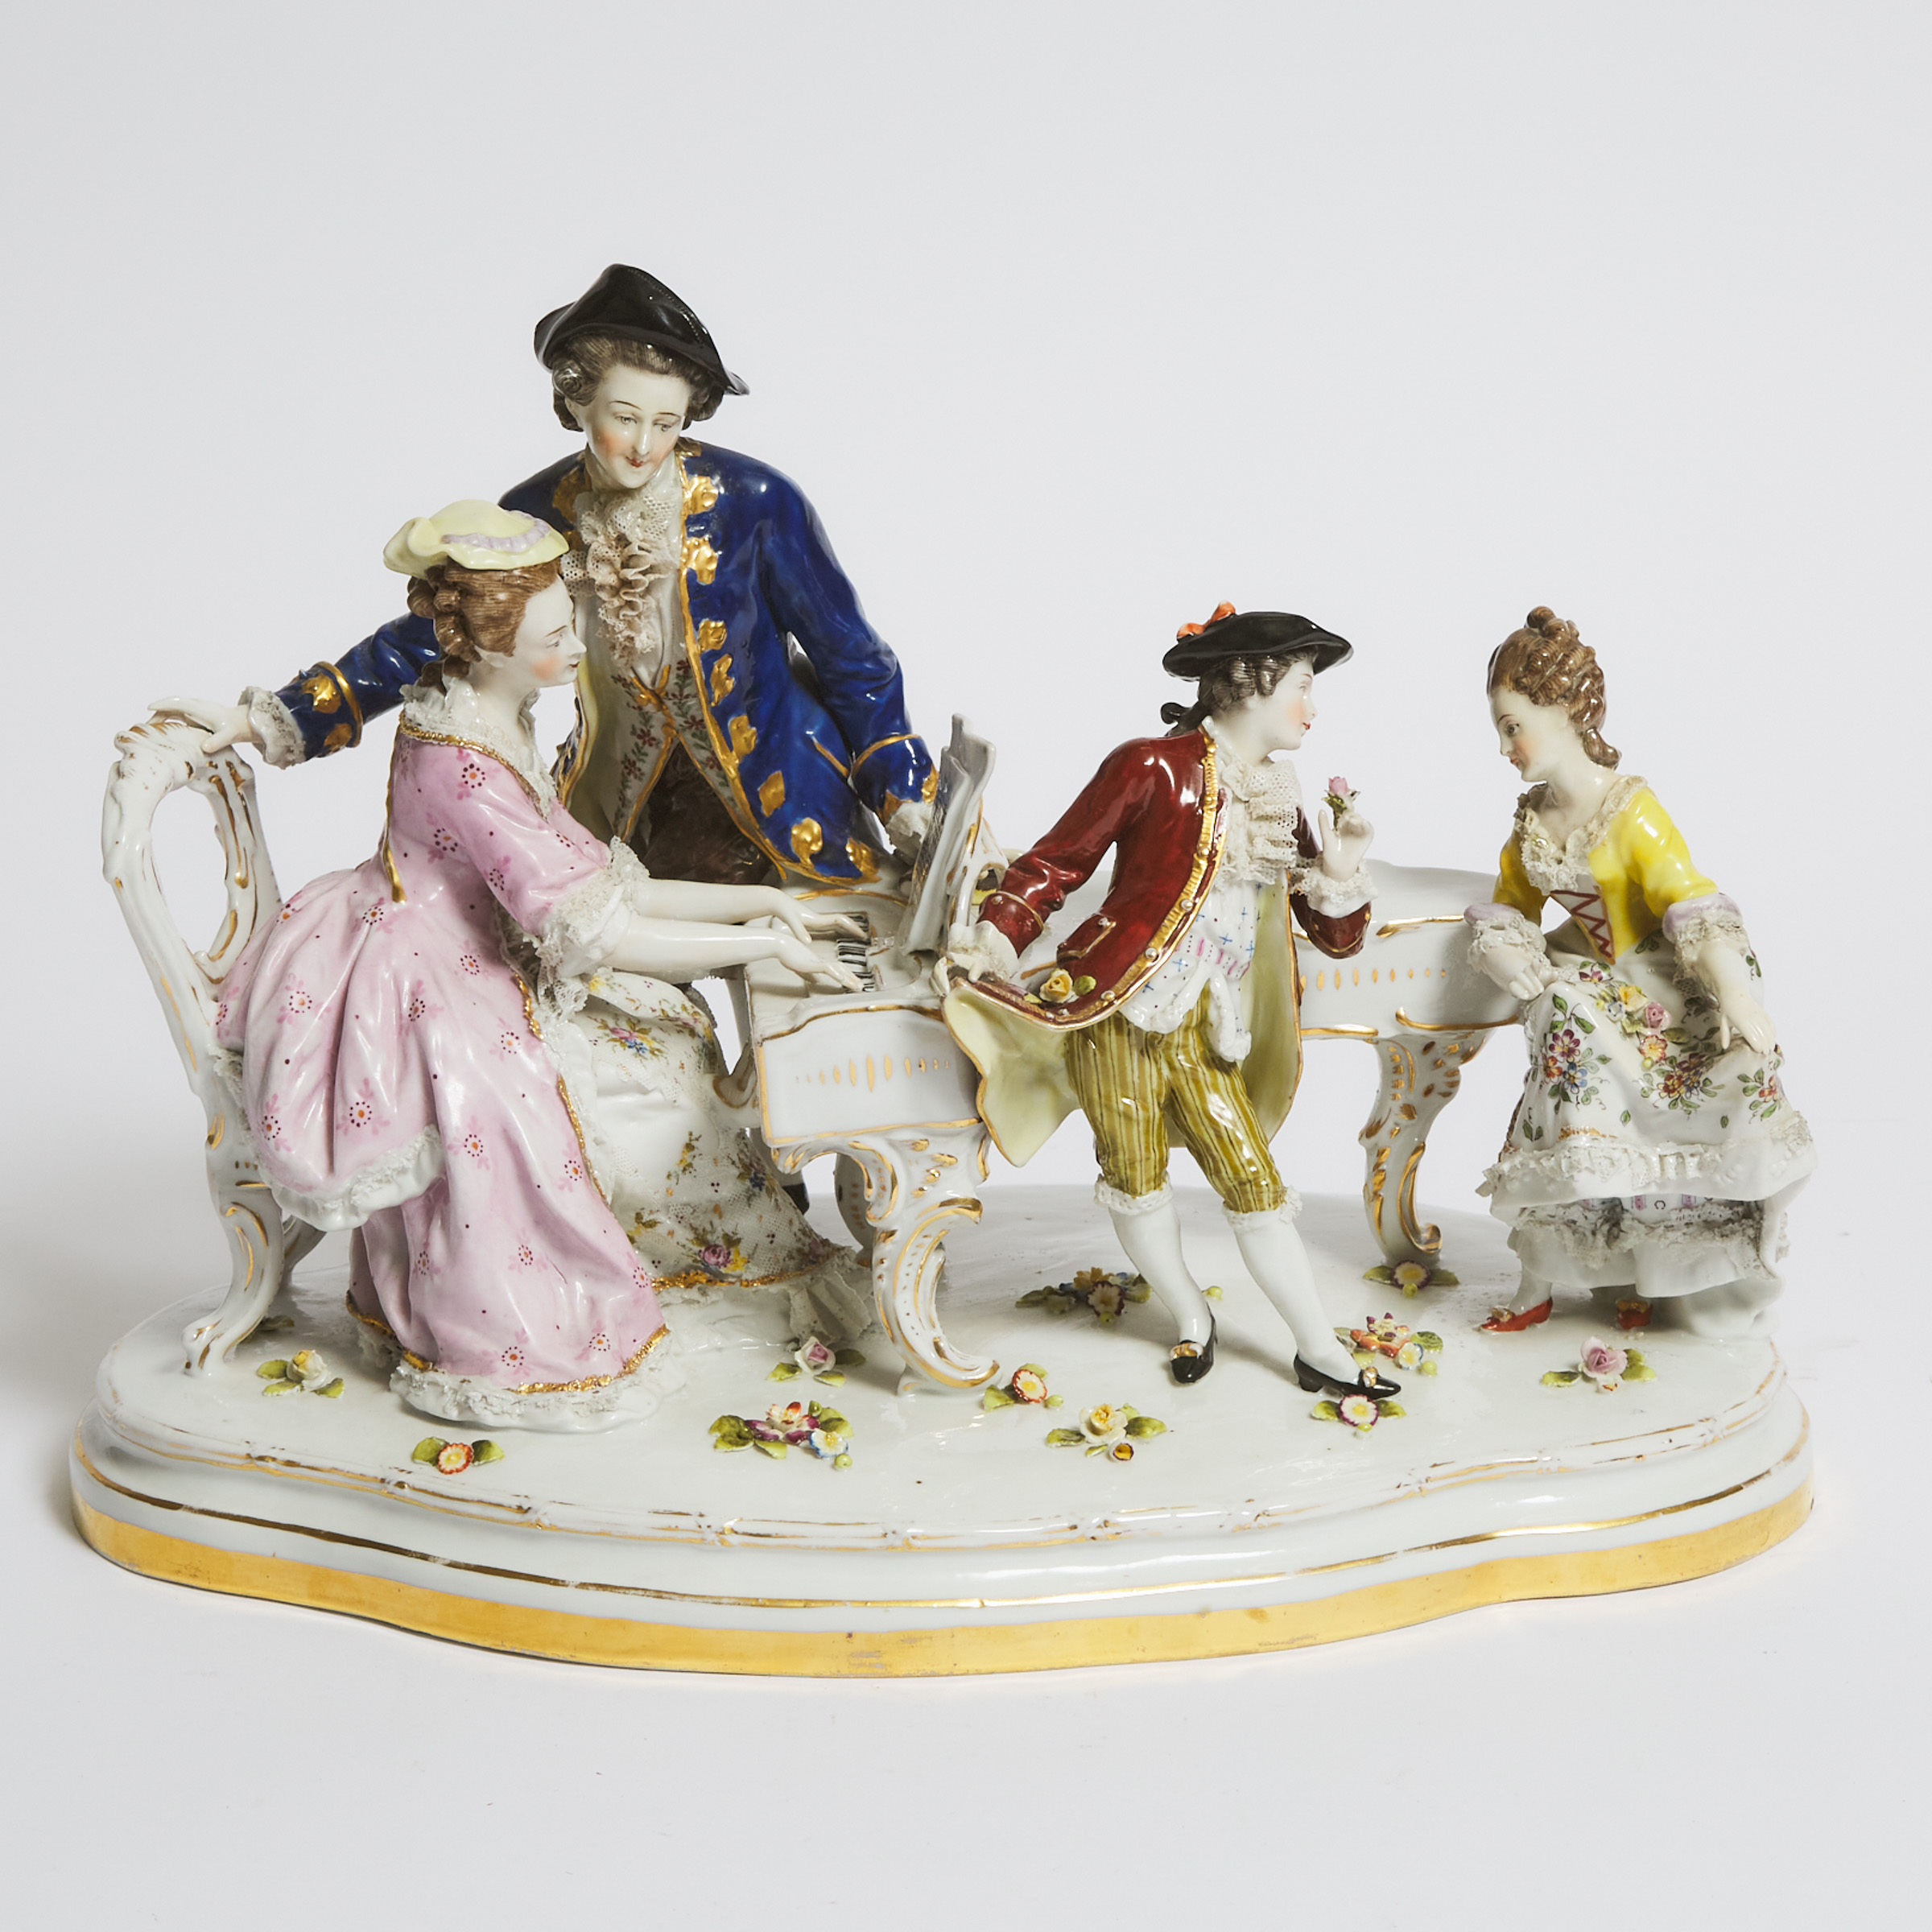 German Porcelain Musical Soirée Figure Group, early 20th century